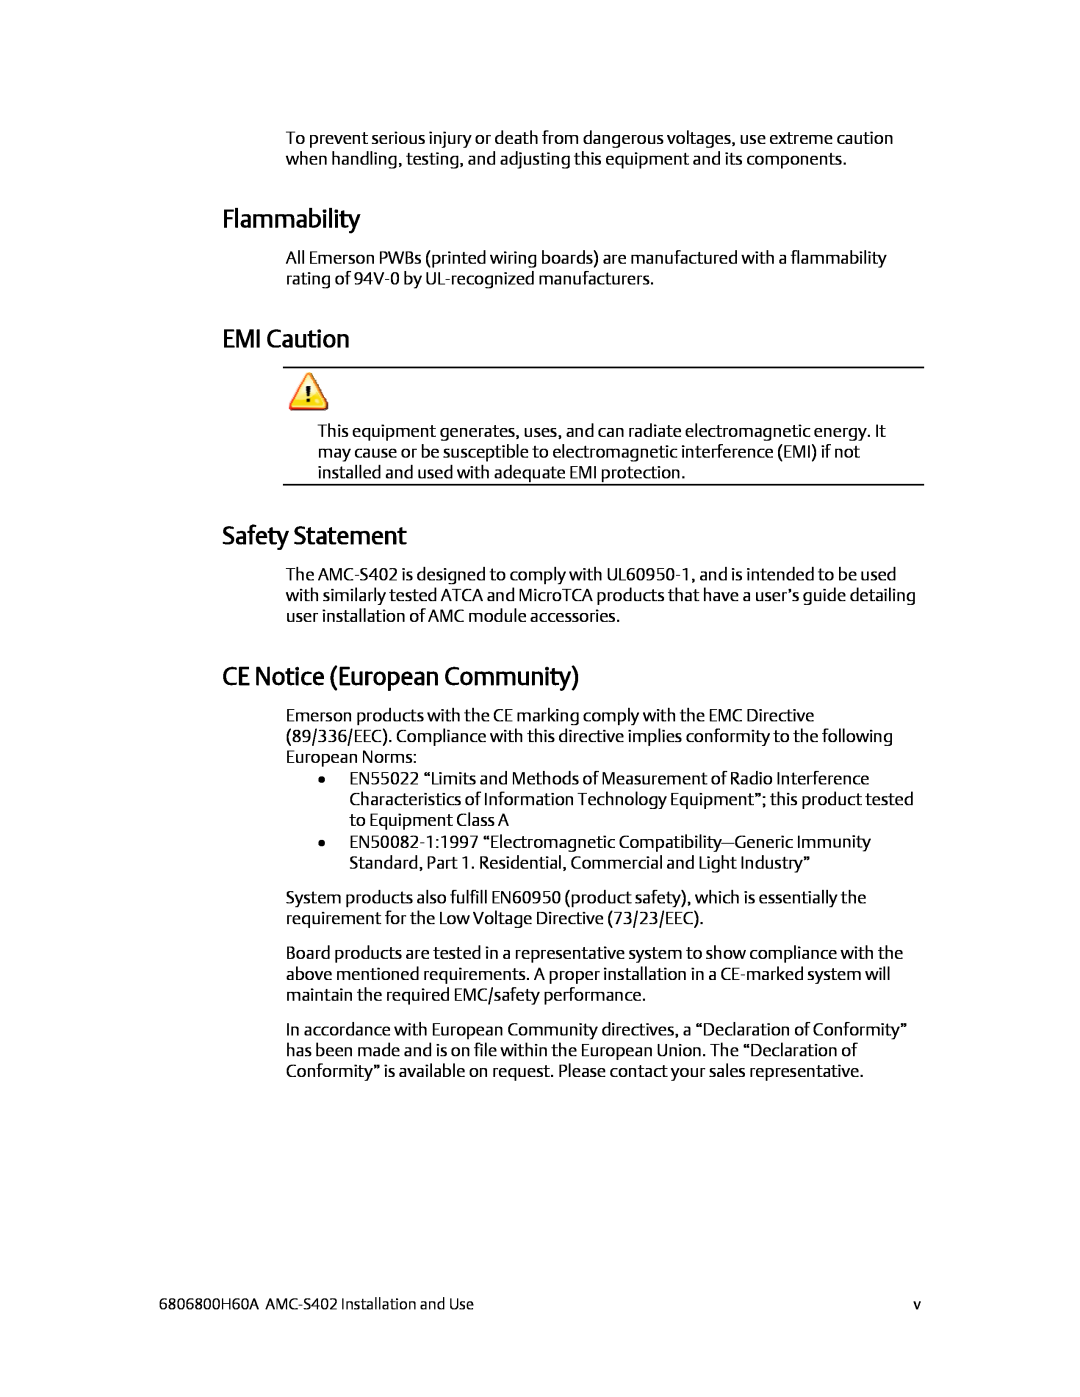 Emerson AMC-S402 manual Flammability, EMI Caution, Safety Statement, CE Notice European Community 